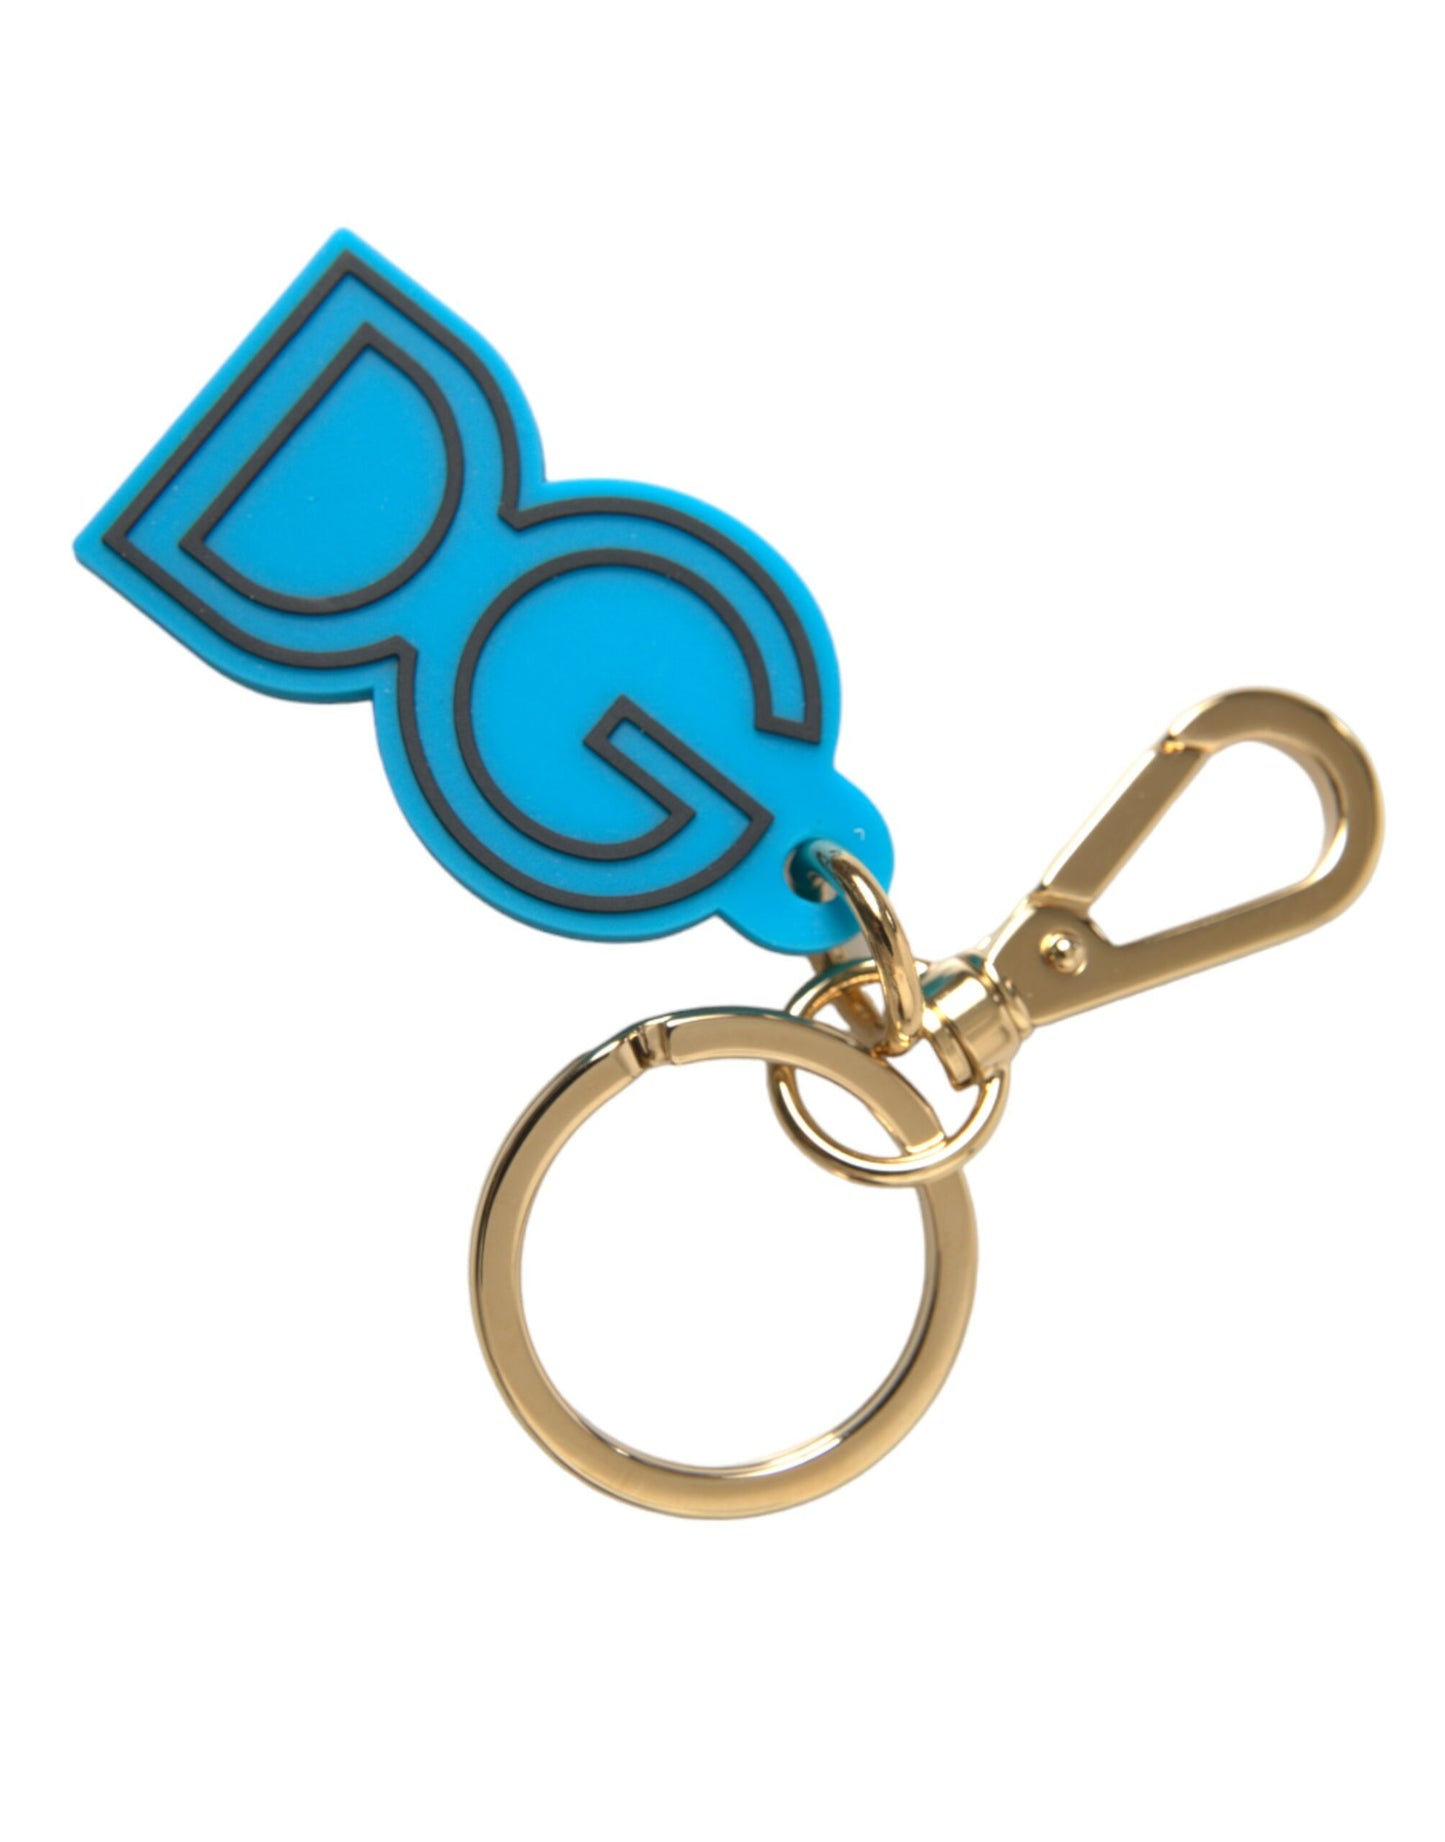 Elegant Blue & Gold Keychain Accessory